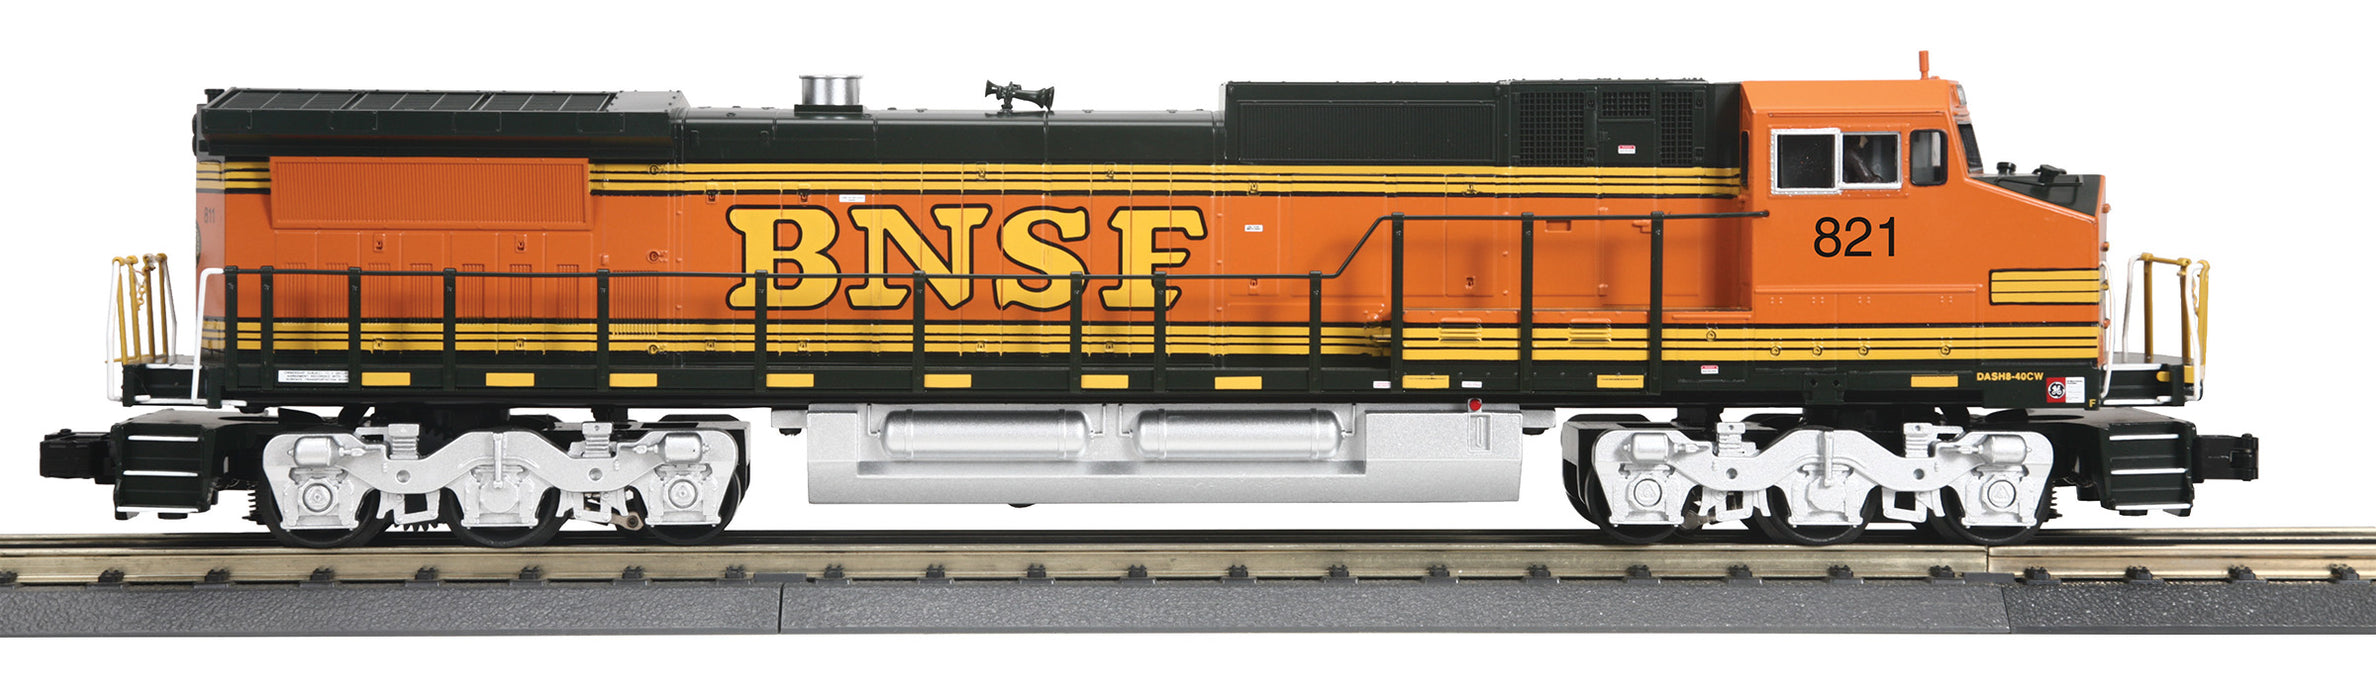 MTH RailKing 30-21090-1 O Gauge GE Dash 8 Diesel Locomotive BNSF 821 with PS3